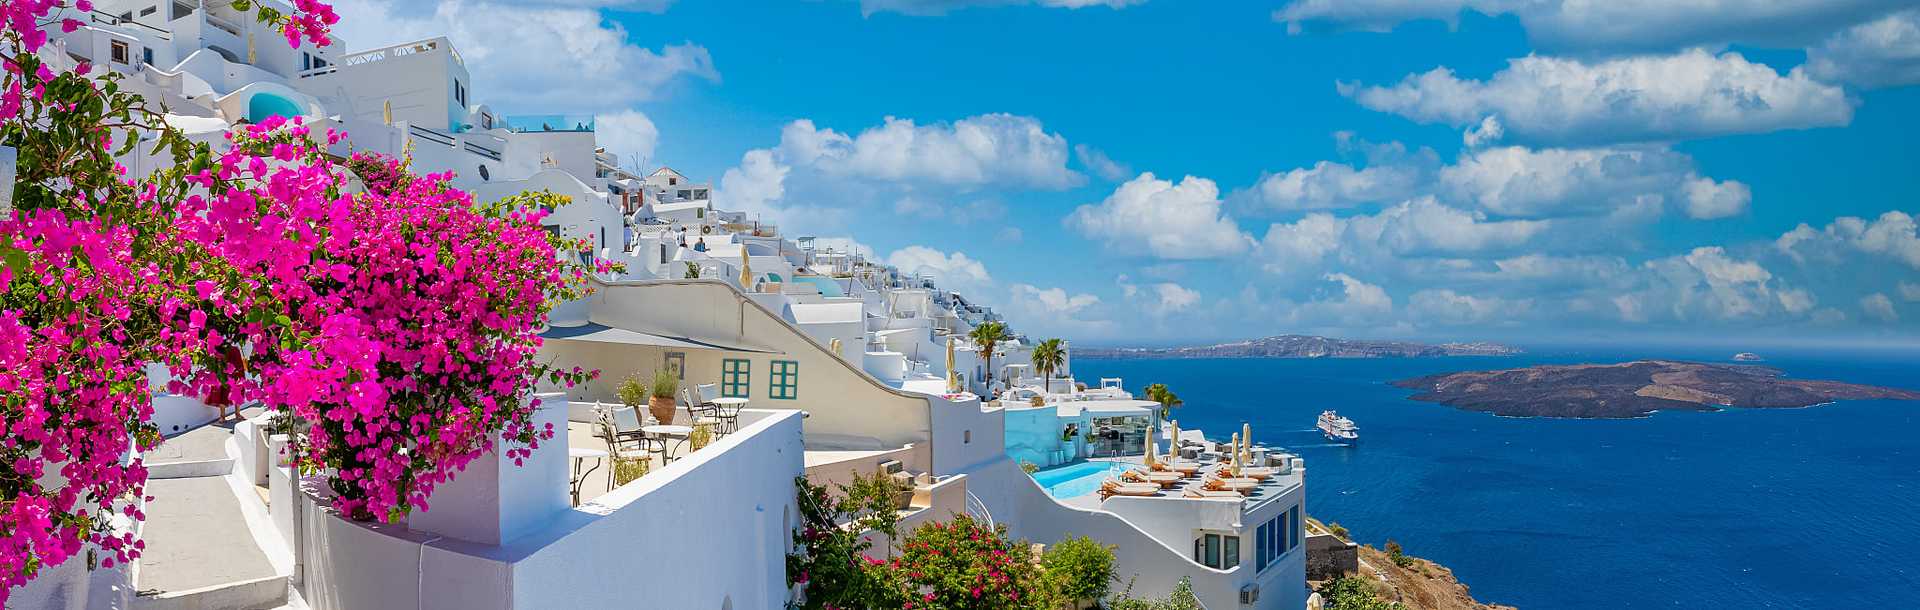 Personalised photo album Greece Holiday travel tourist wedding honeymoon gift